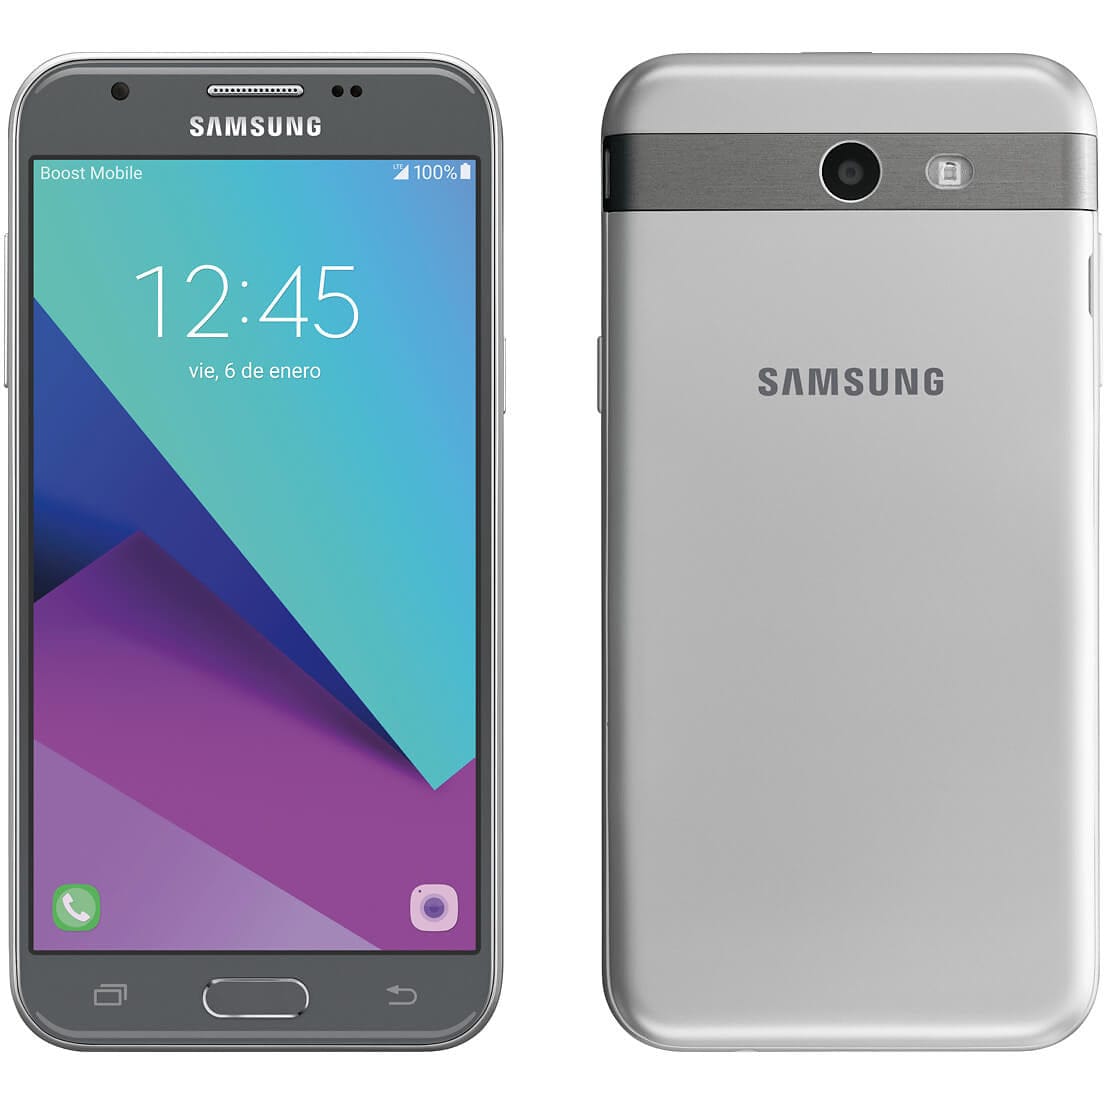 Samsung Galaxy J3 (2017) - 16 GB - Silver - Boost Mobile - CDMA-